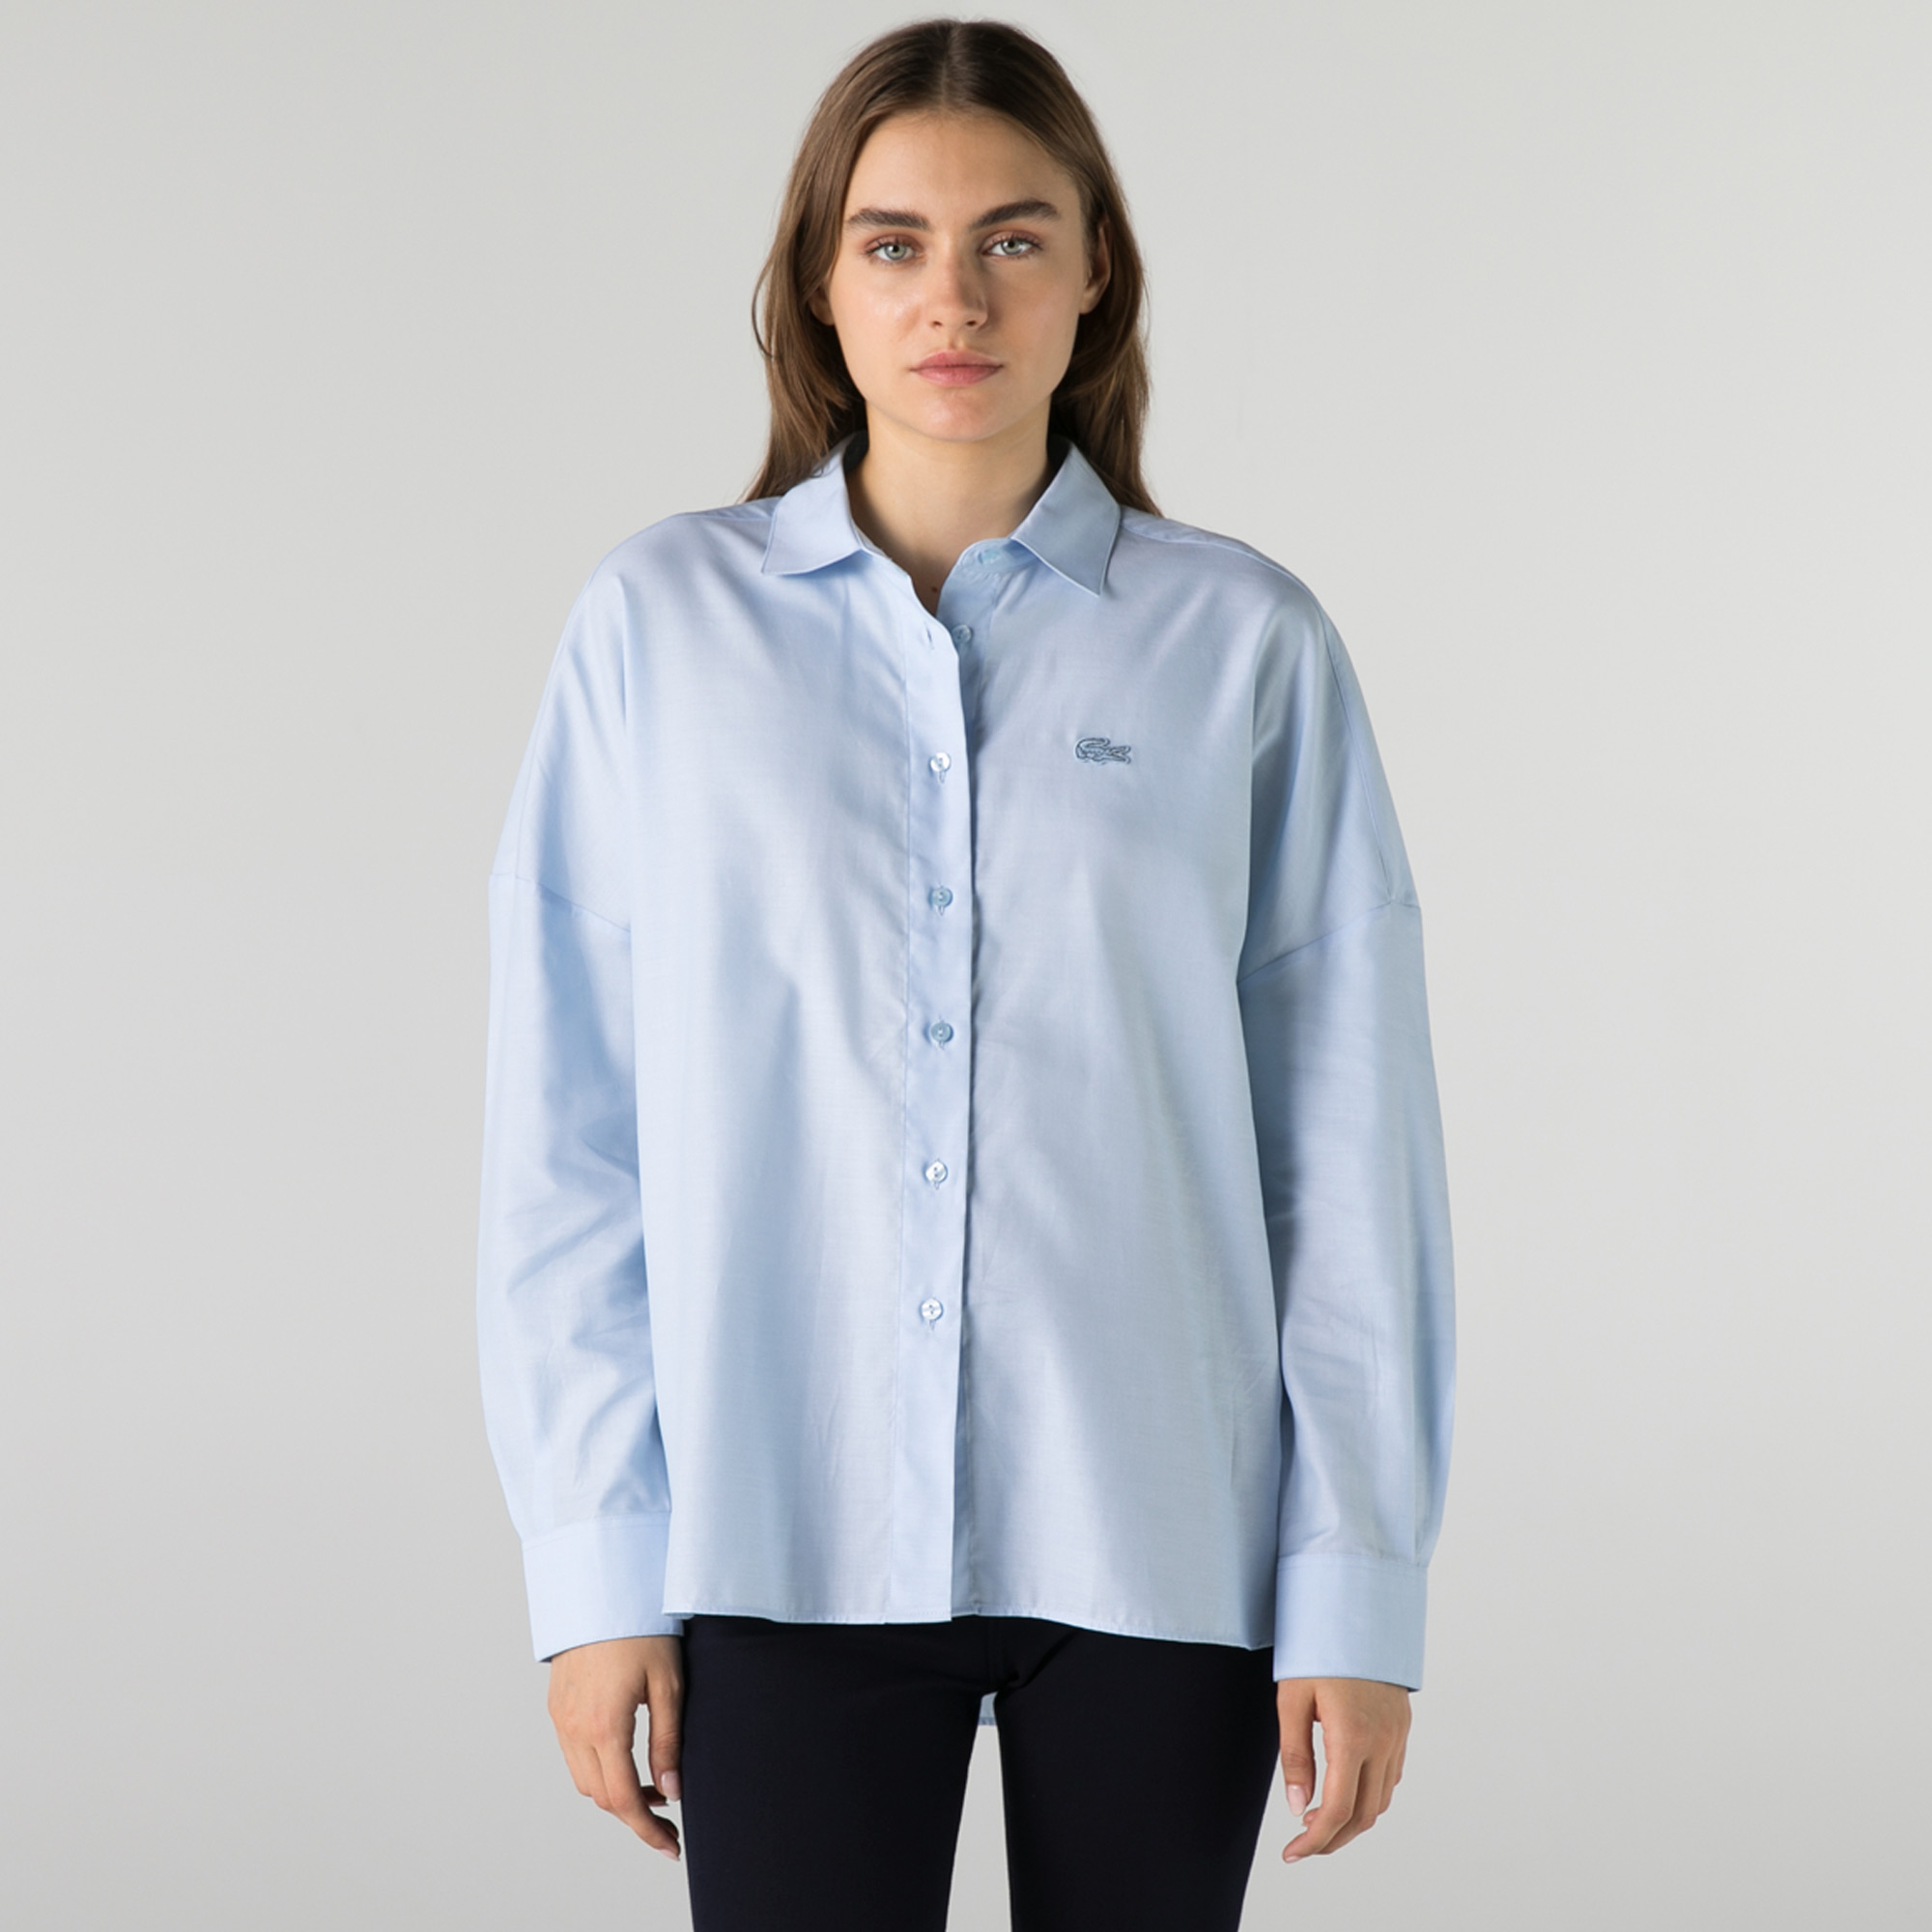 Lacoste Kadın Relaxed Fit Mavi Gömlek. 1